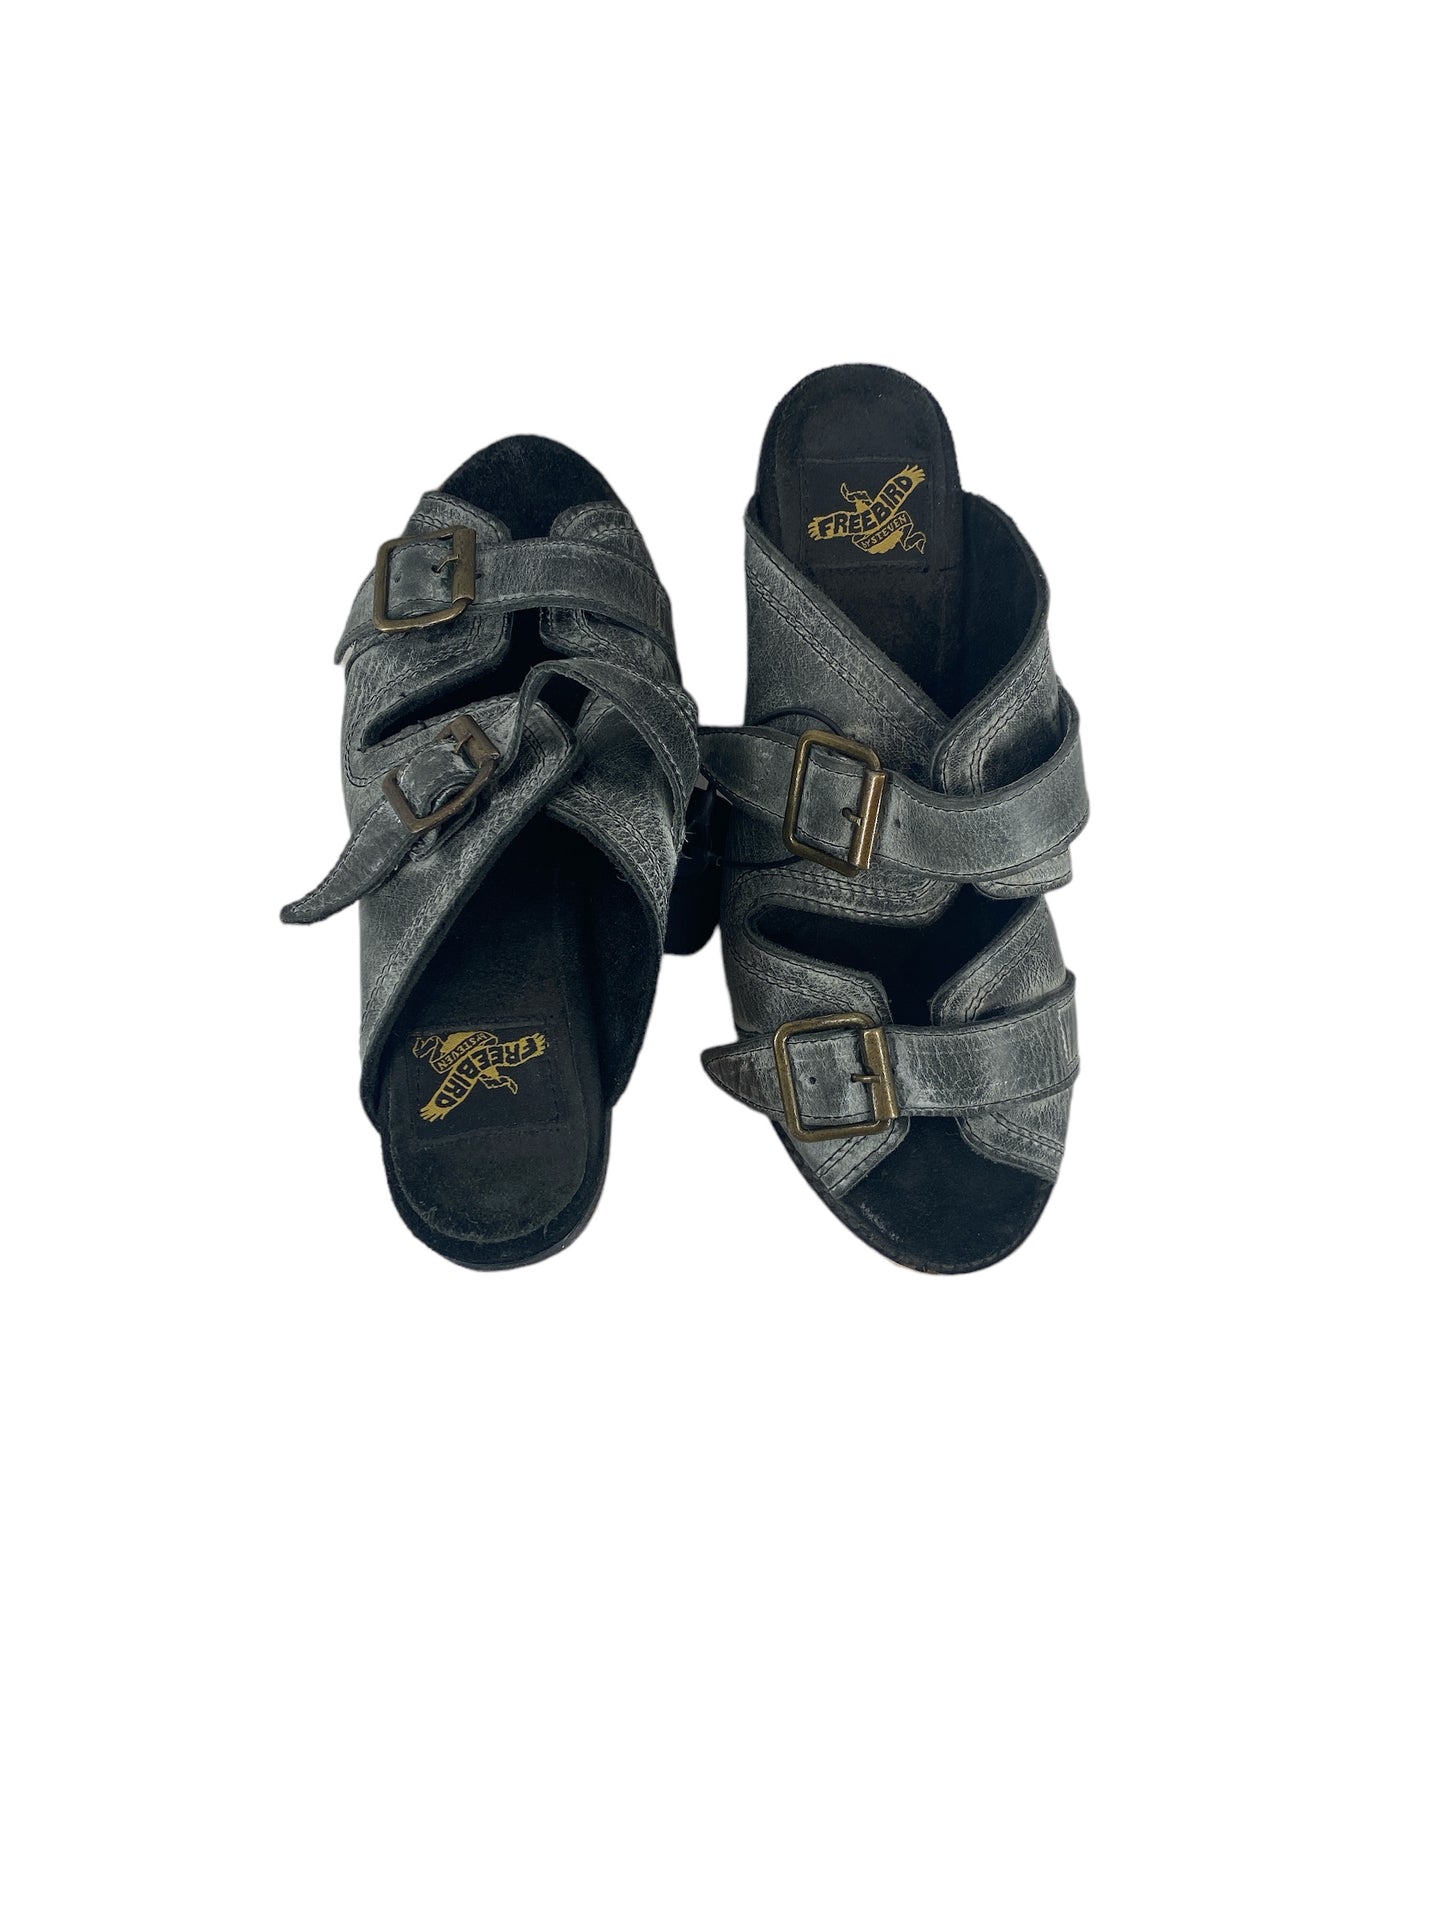 Sandals Heels Block By Freebird  Size: 7